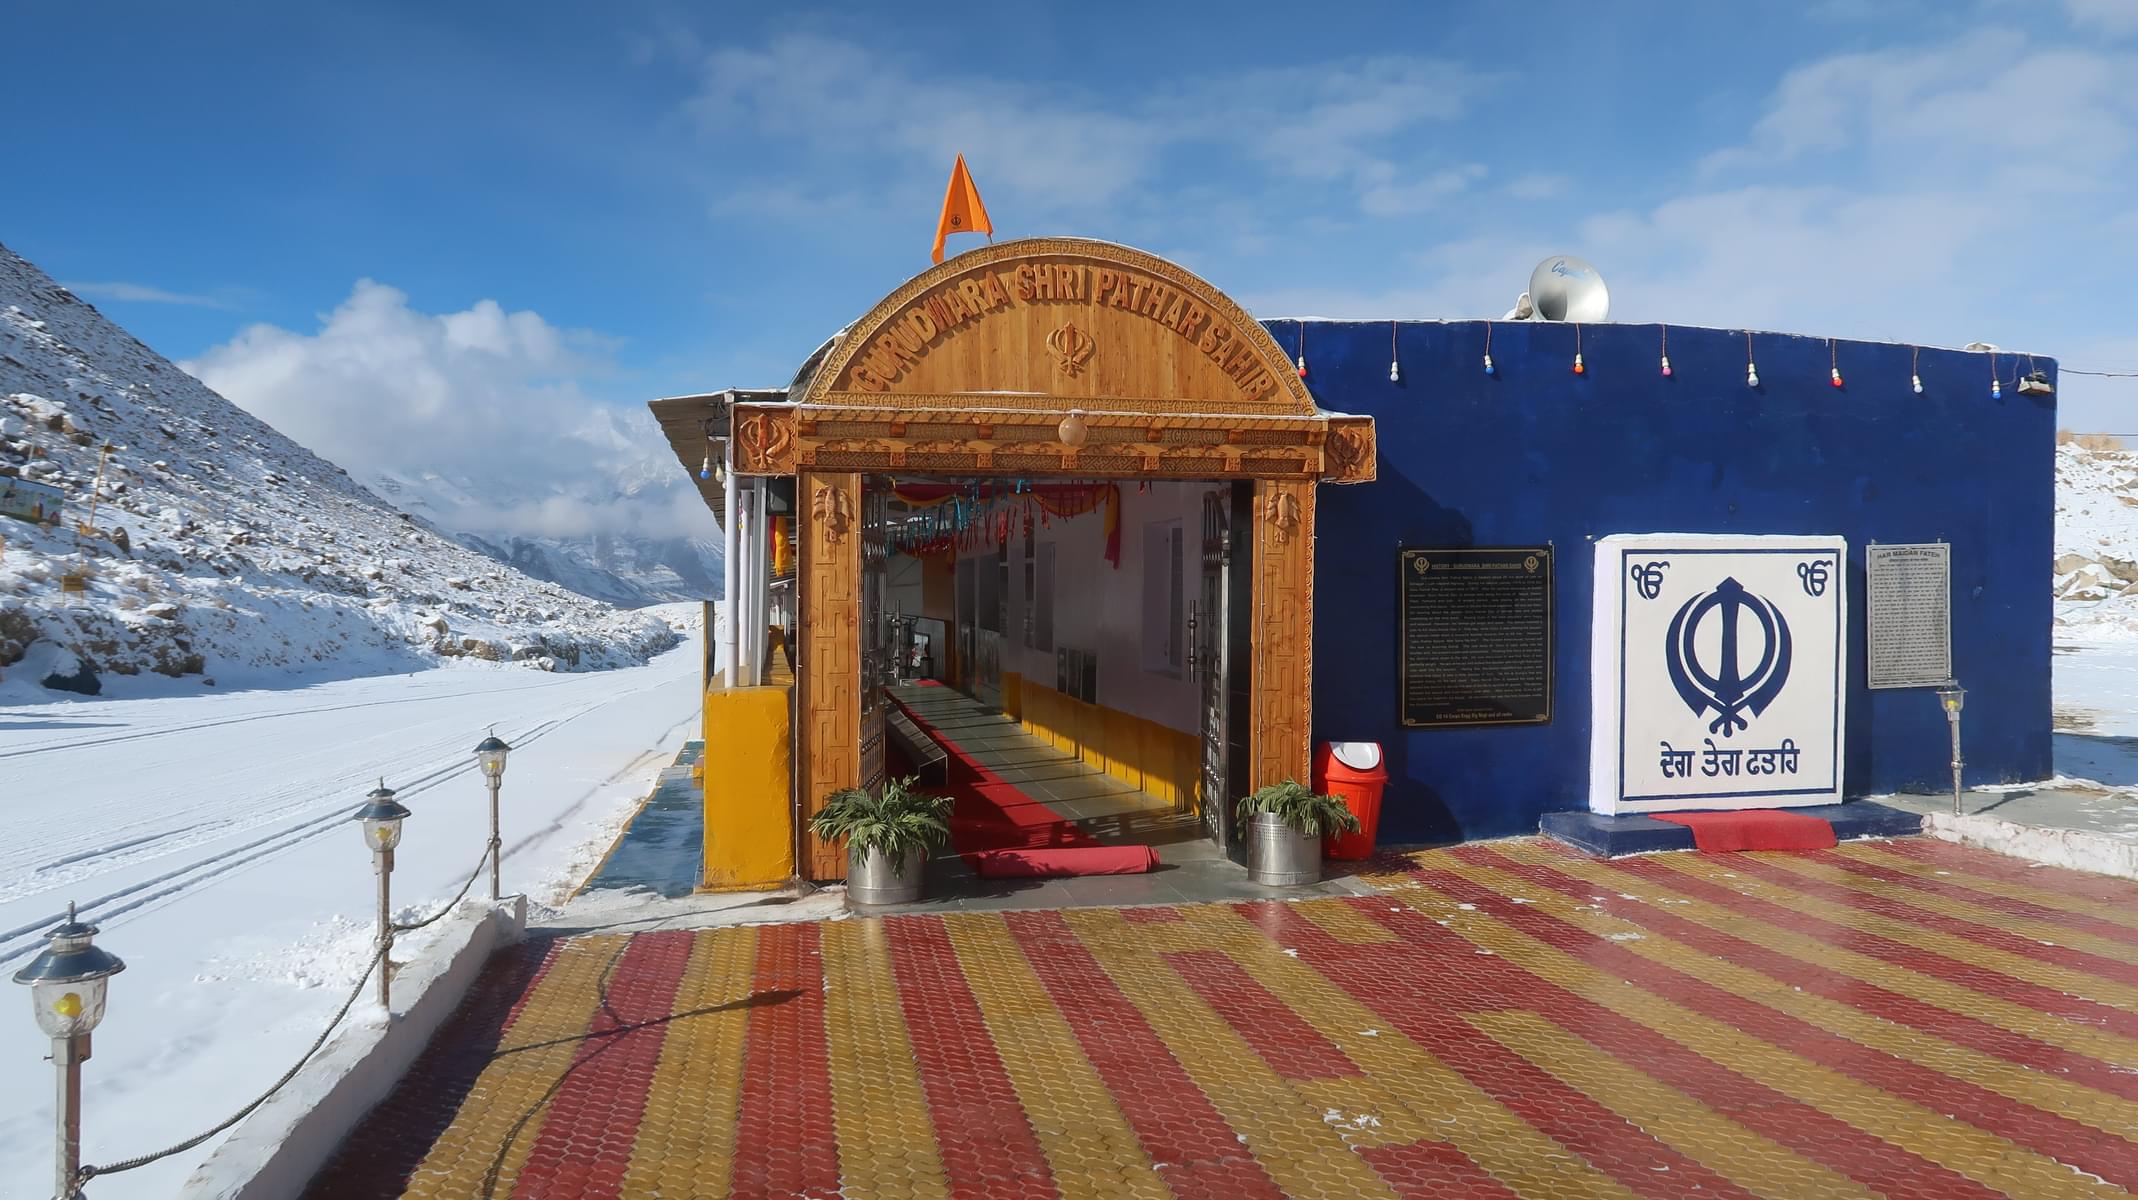 Gurudwara Shri Pathar Sahib is a symbol of peace and brotherhood in the heart of Ladakh